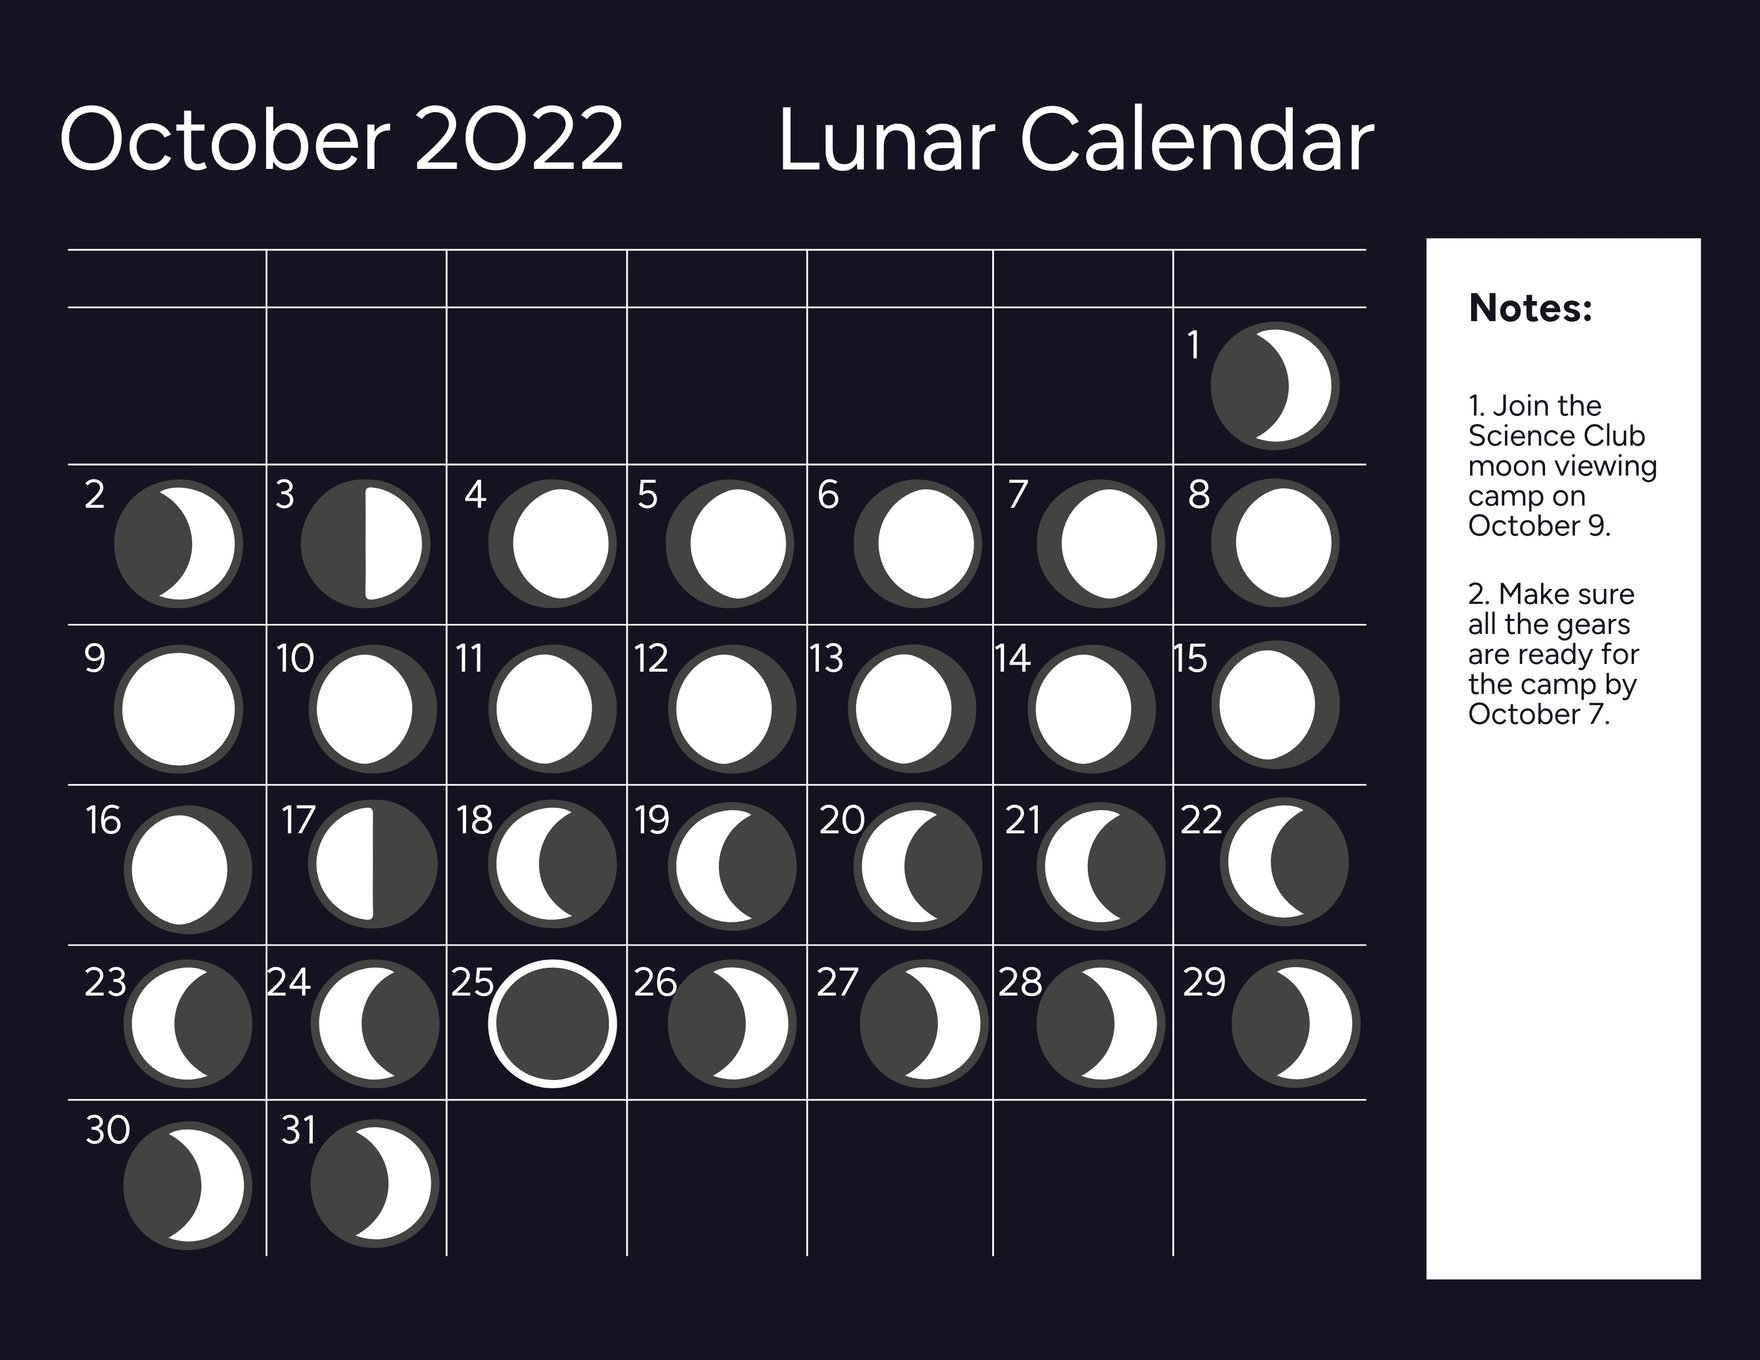 Lunar Calendar October 2022